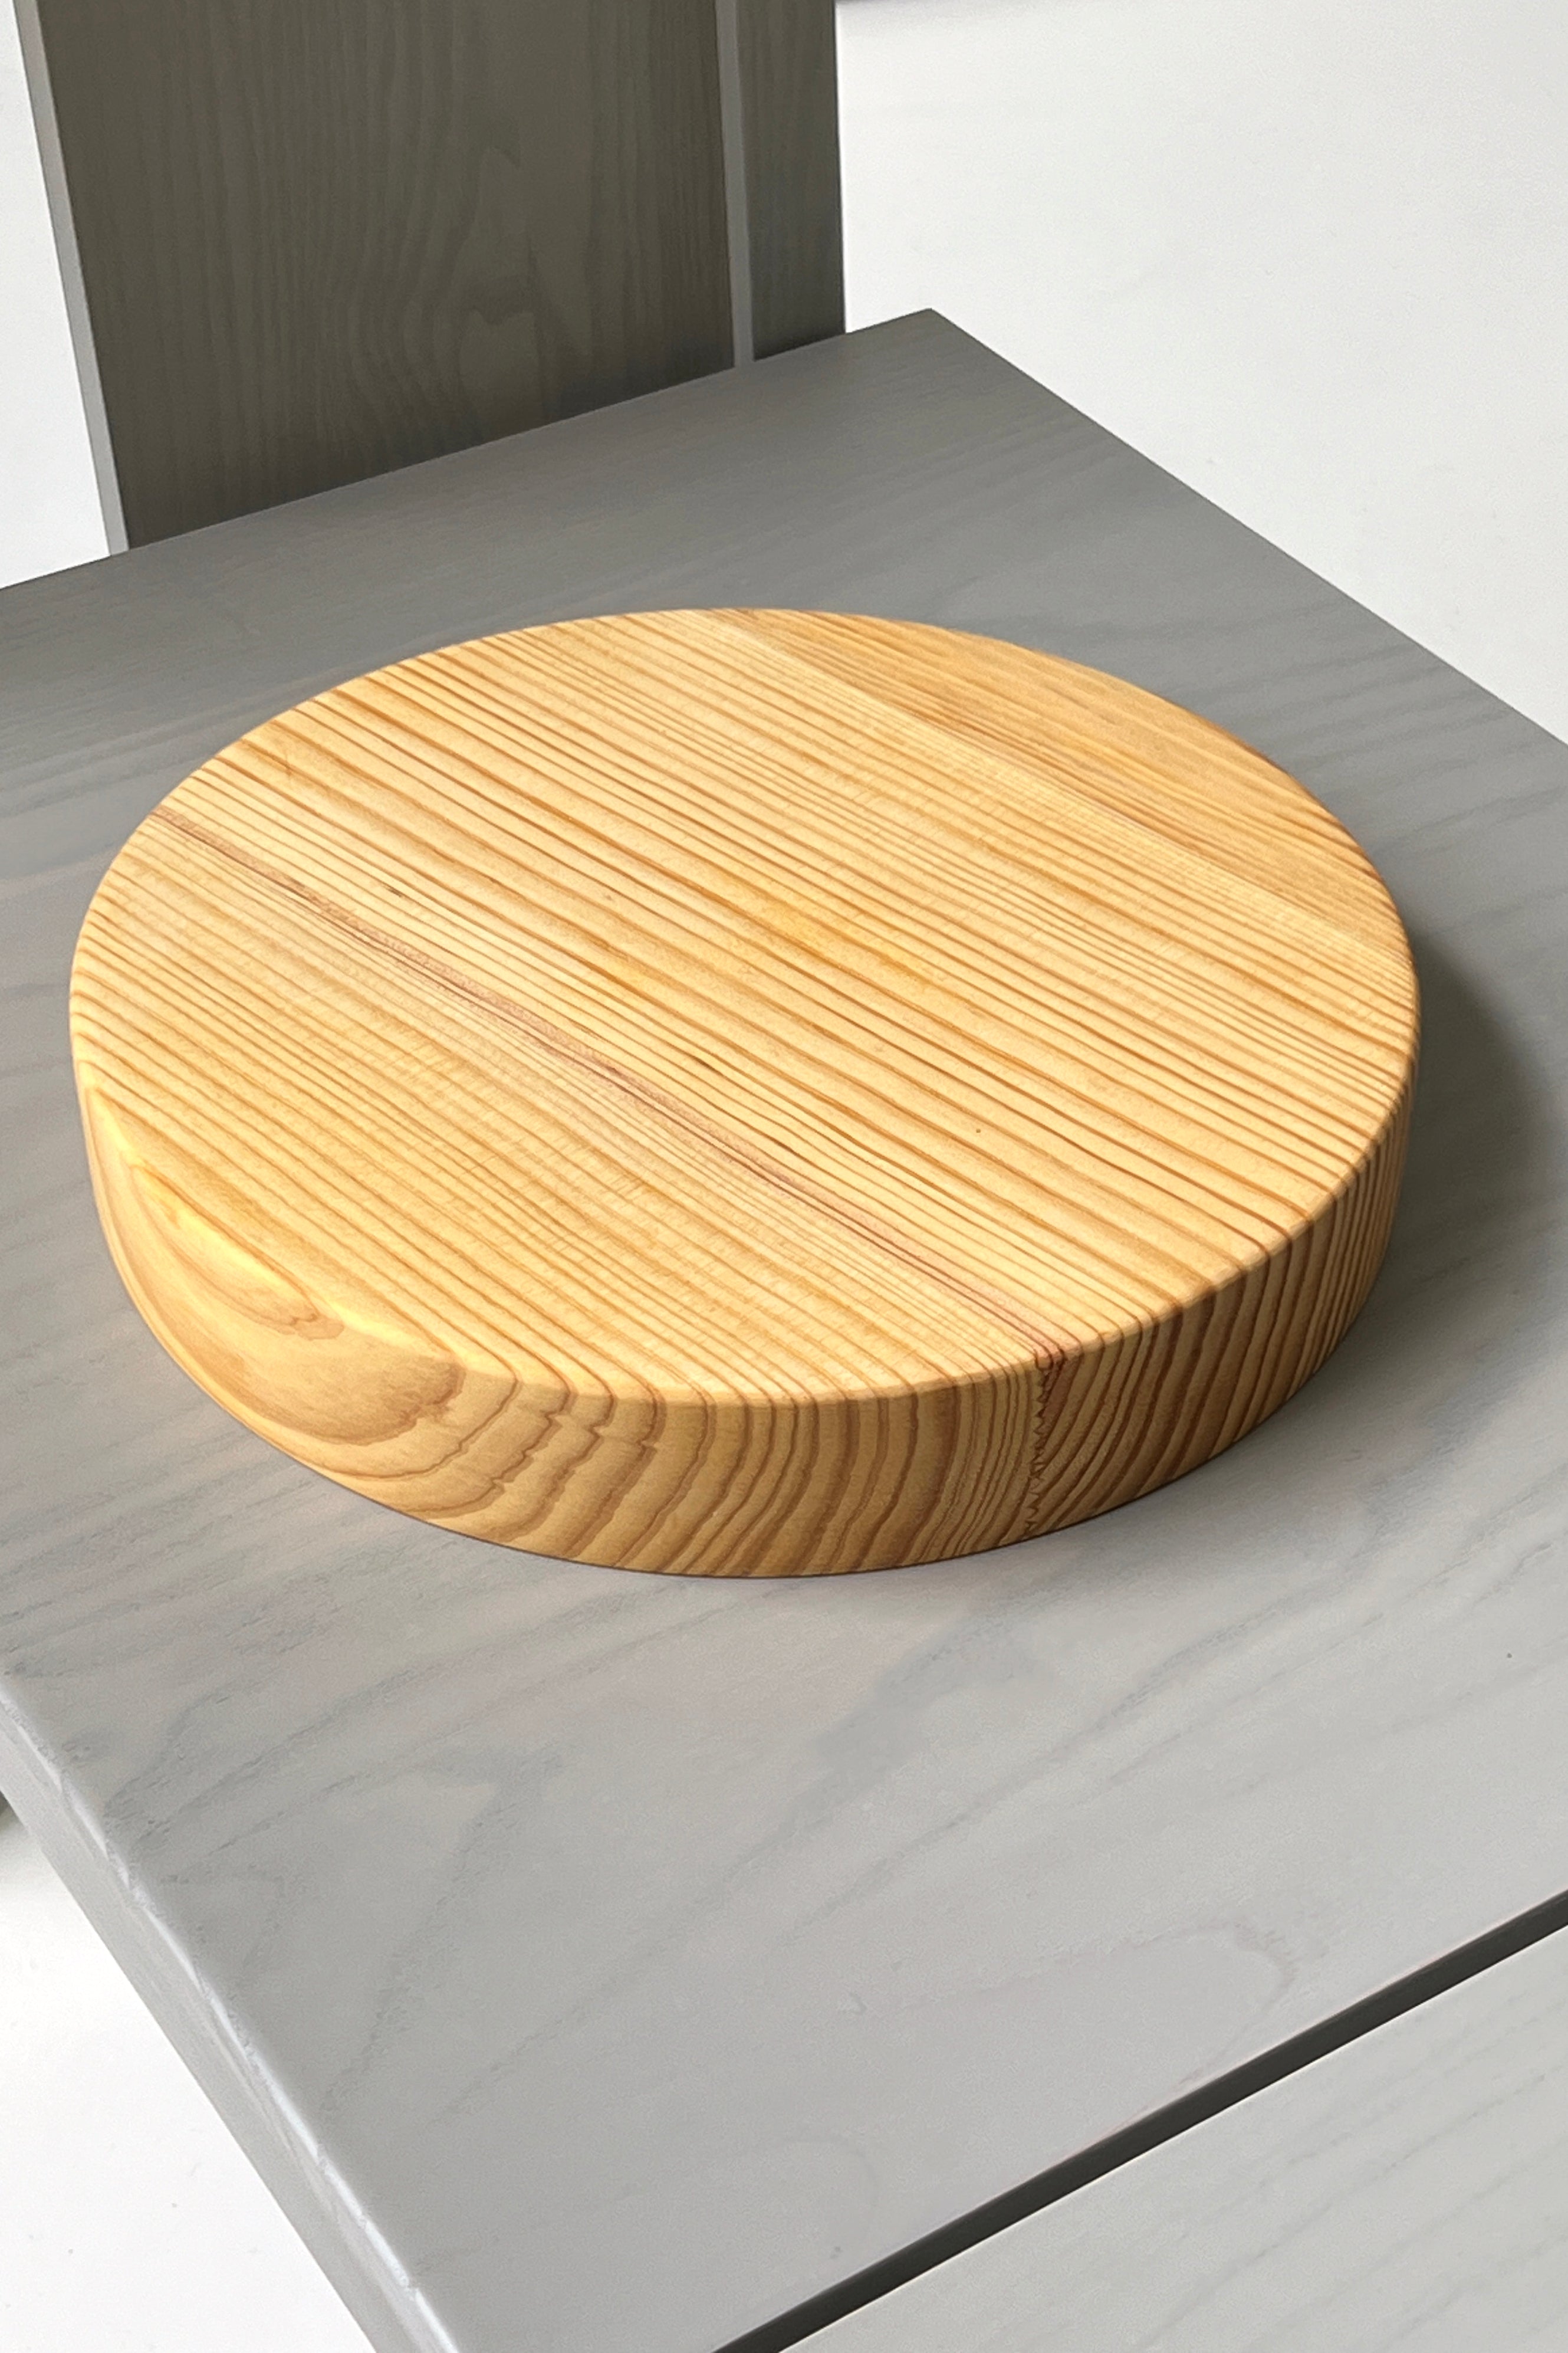 Sample item - round pine board-Inox-KIOSK48TH